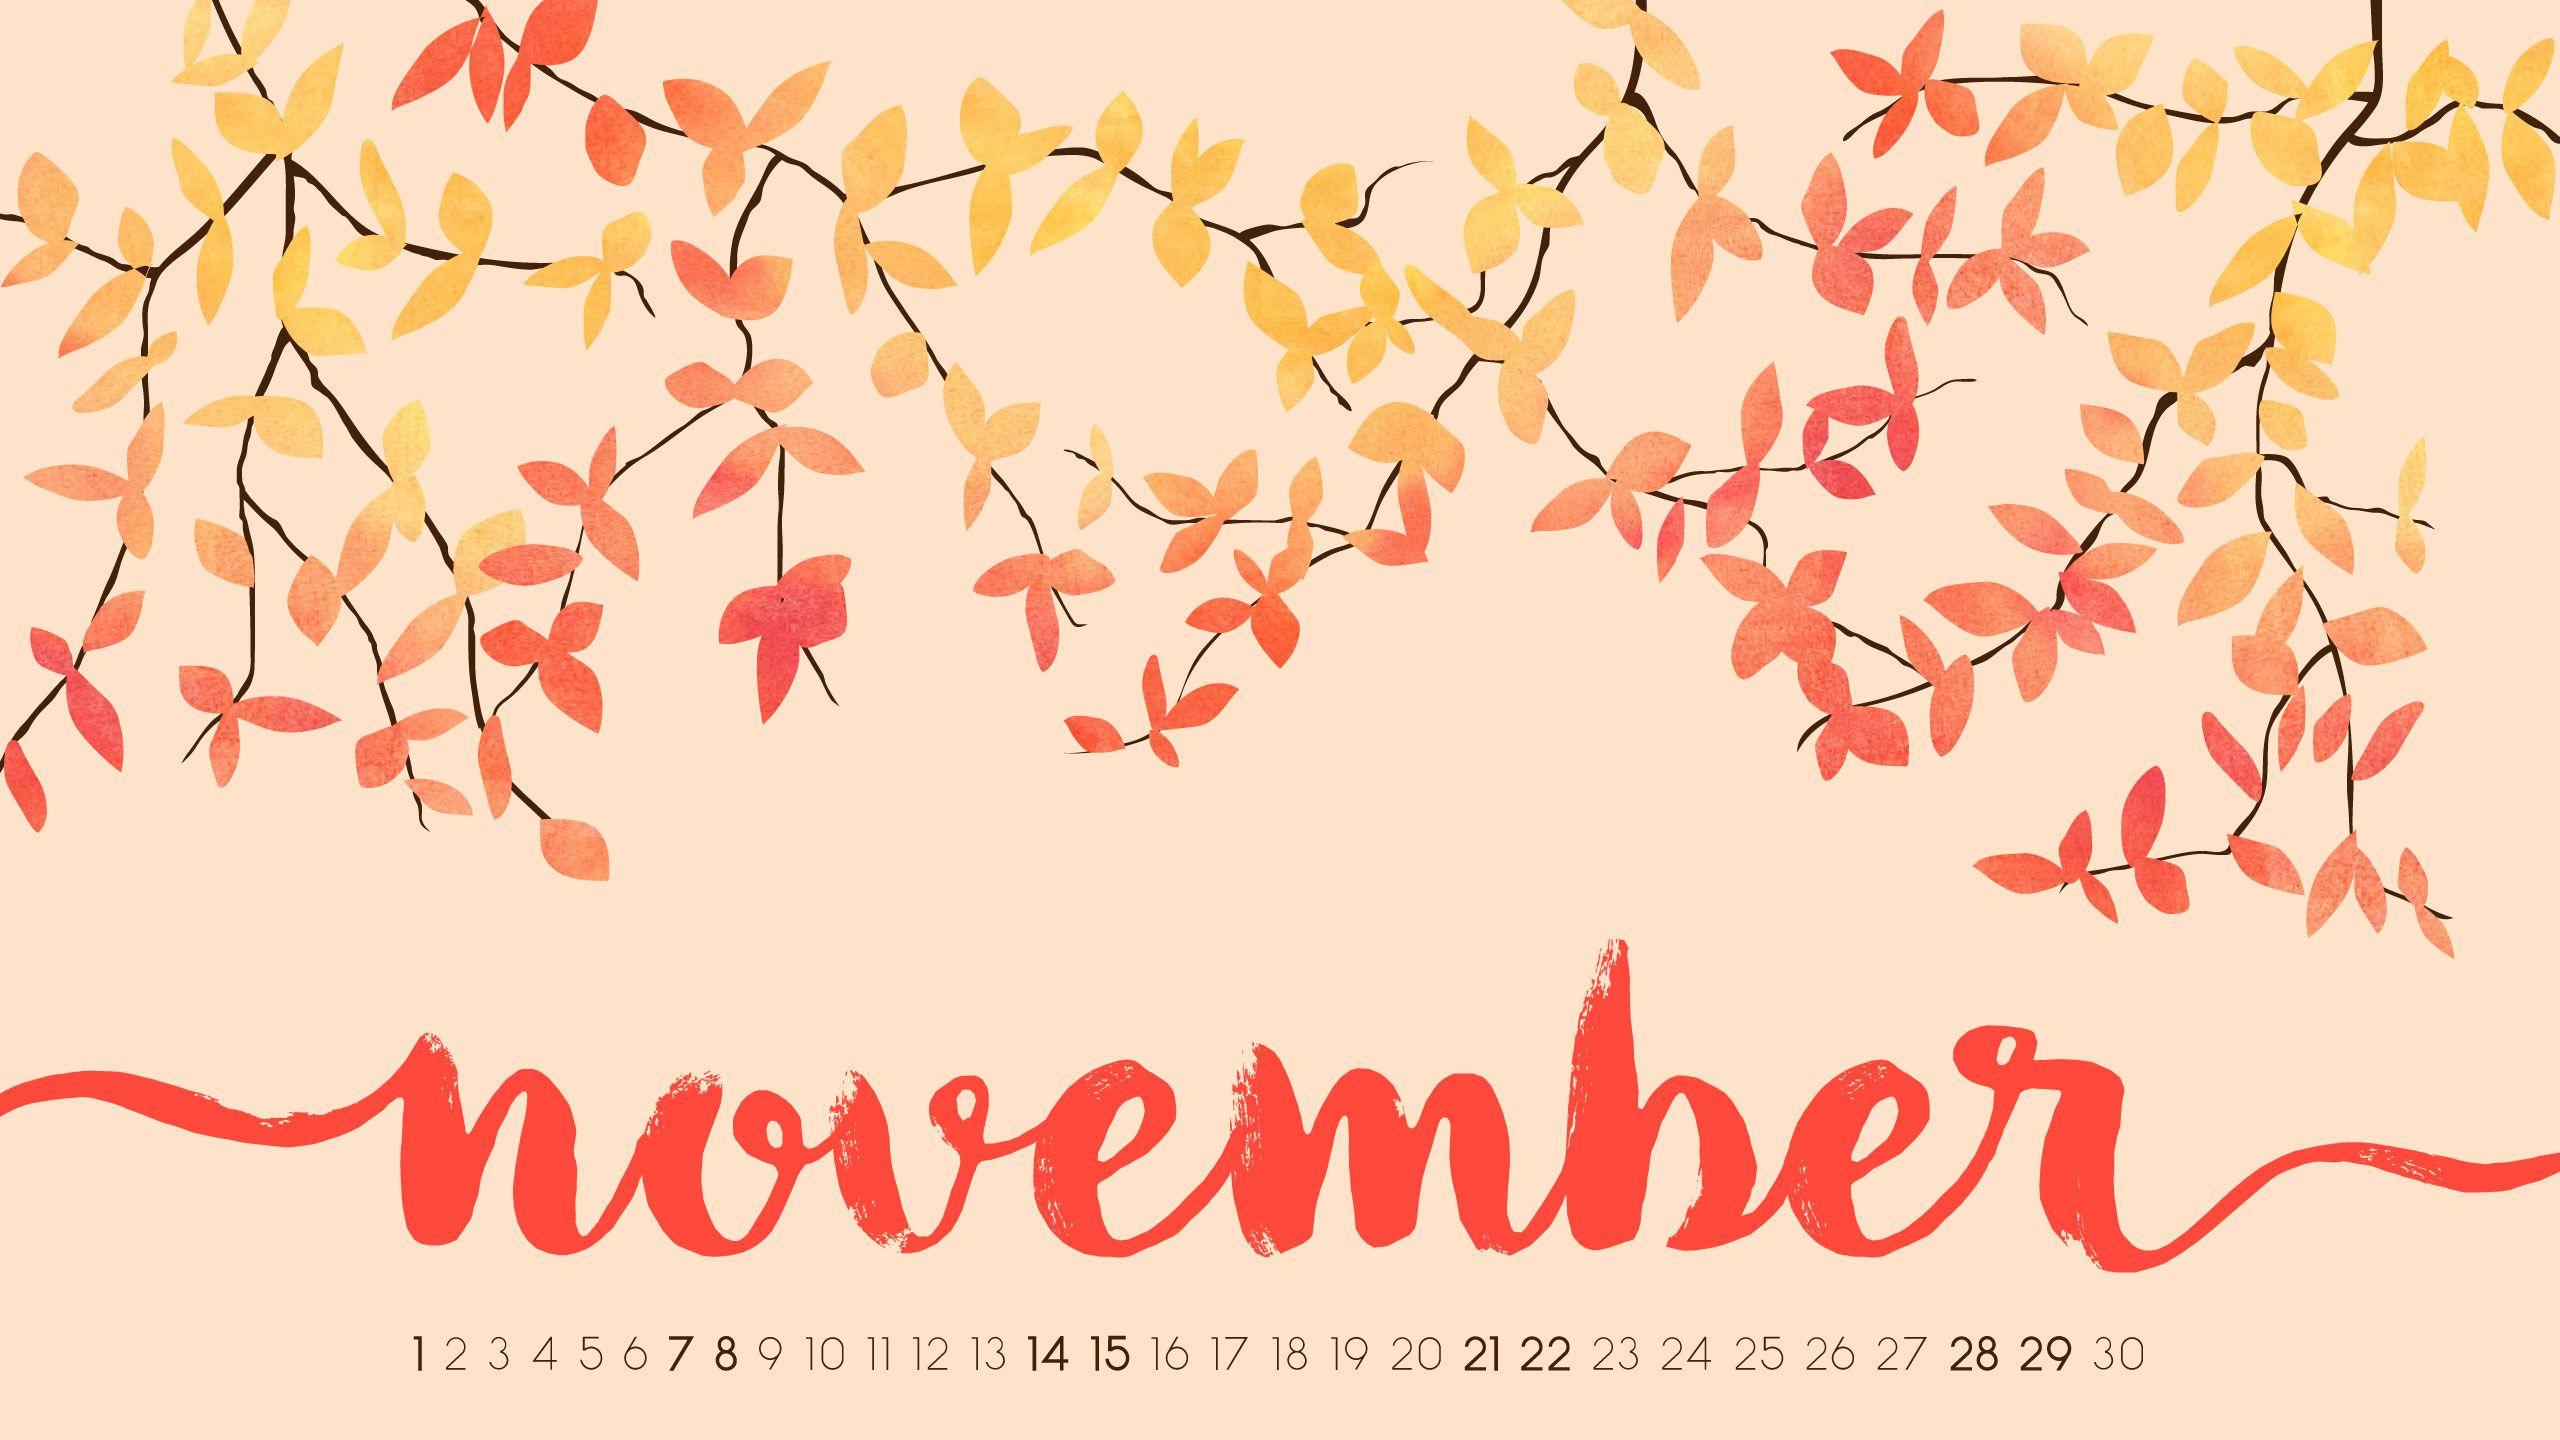 november-2018-calendar-wallpapers-wallpaper-cave